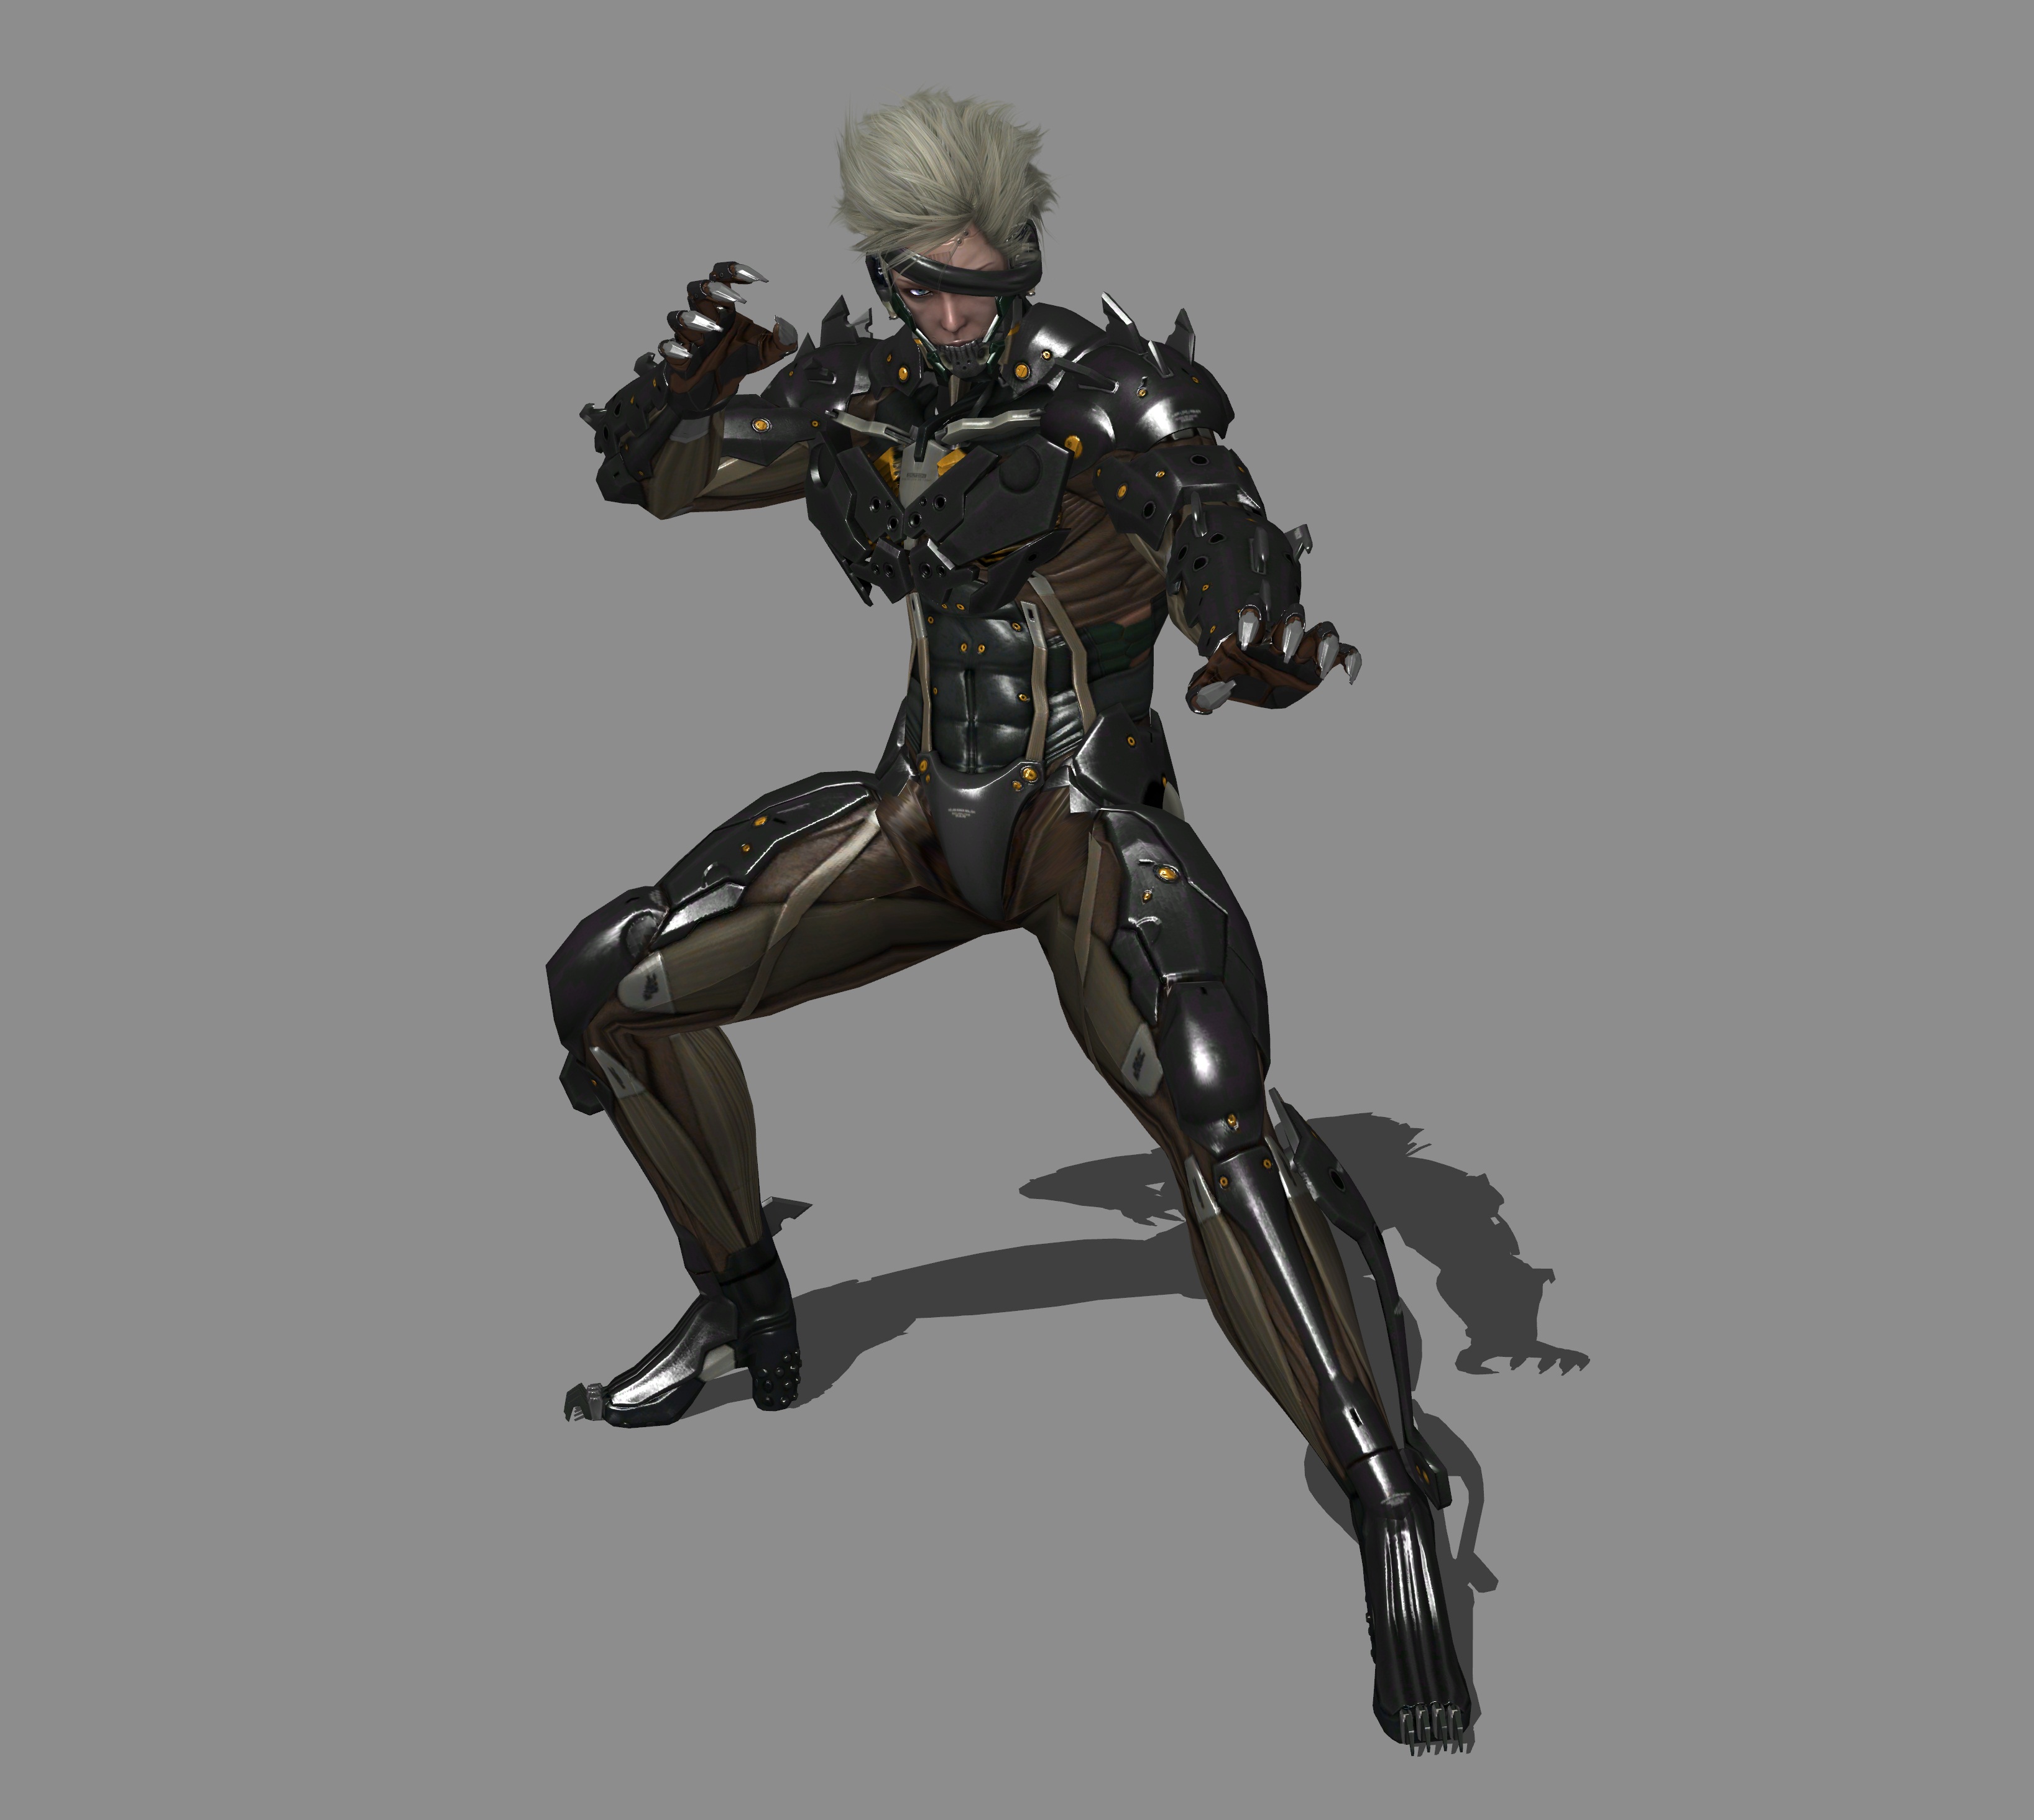 Metal Gear Rising Revengeance Raiden and Sam by miza-ky on DeviantArt